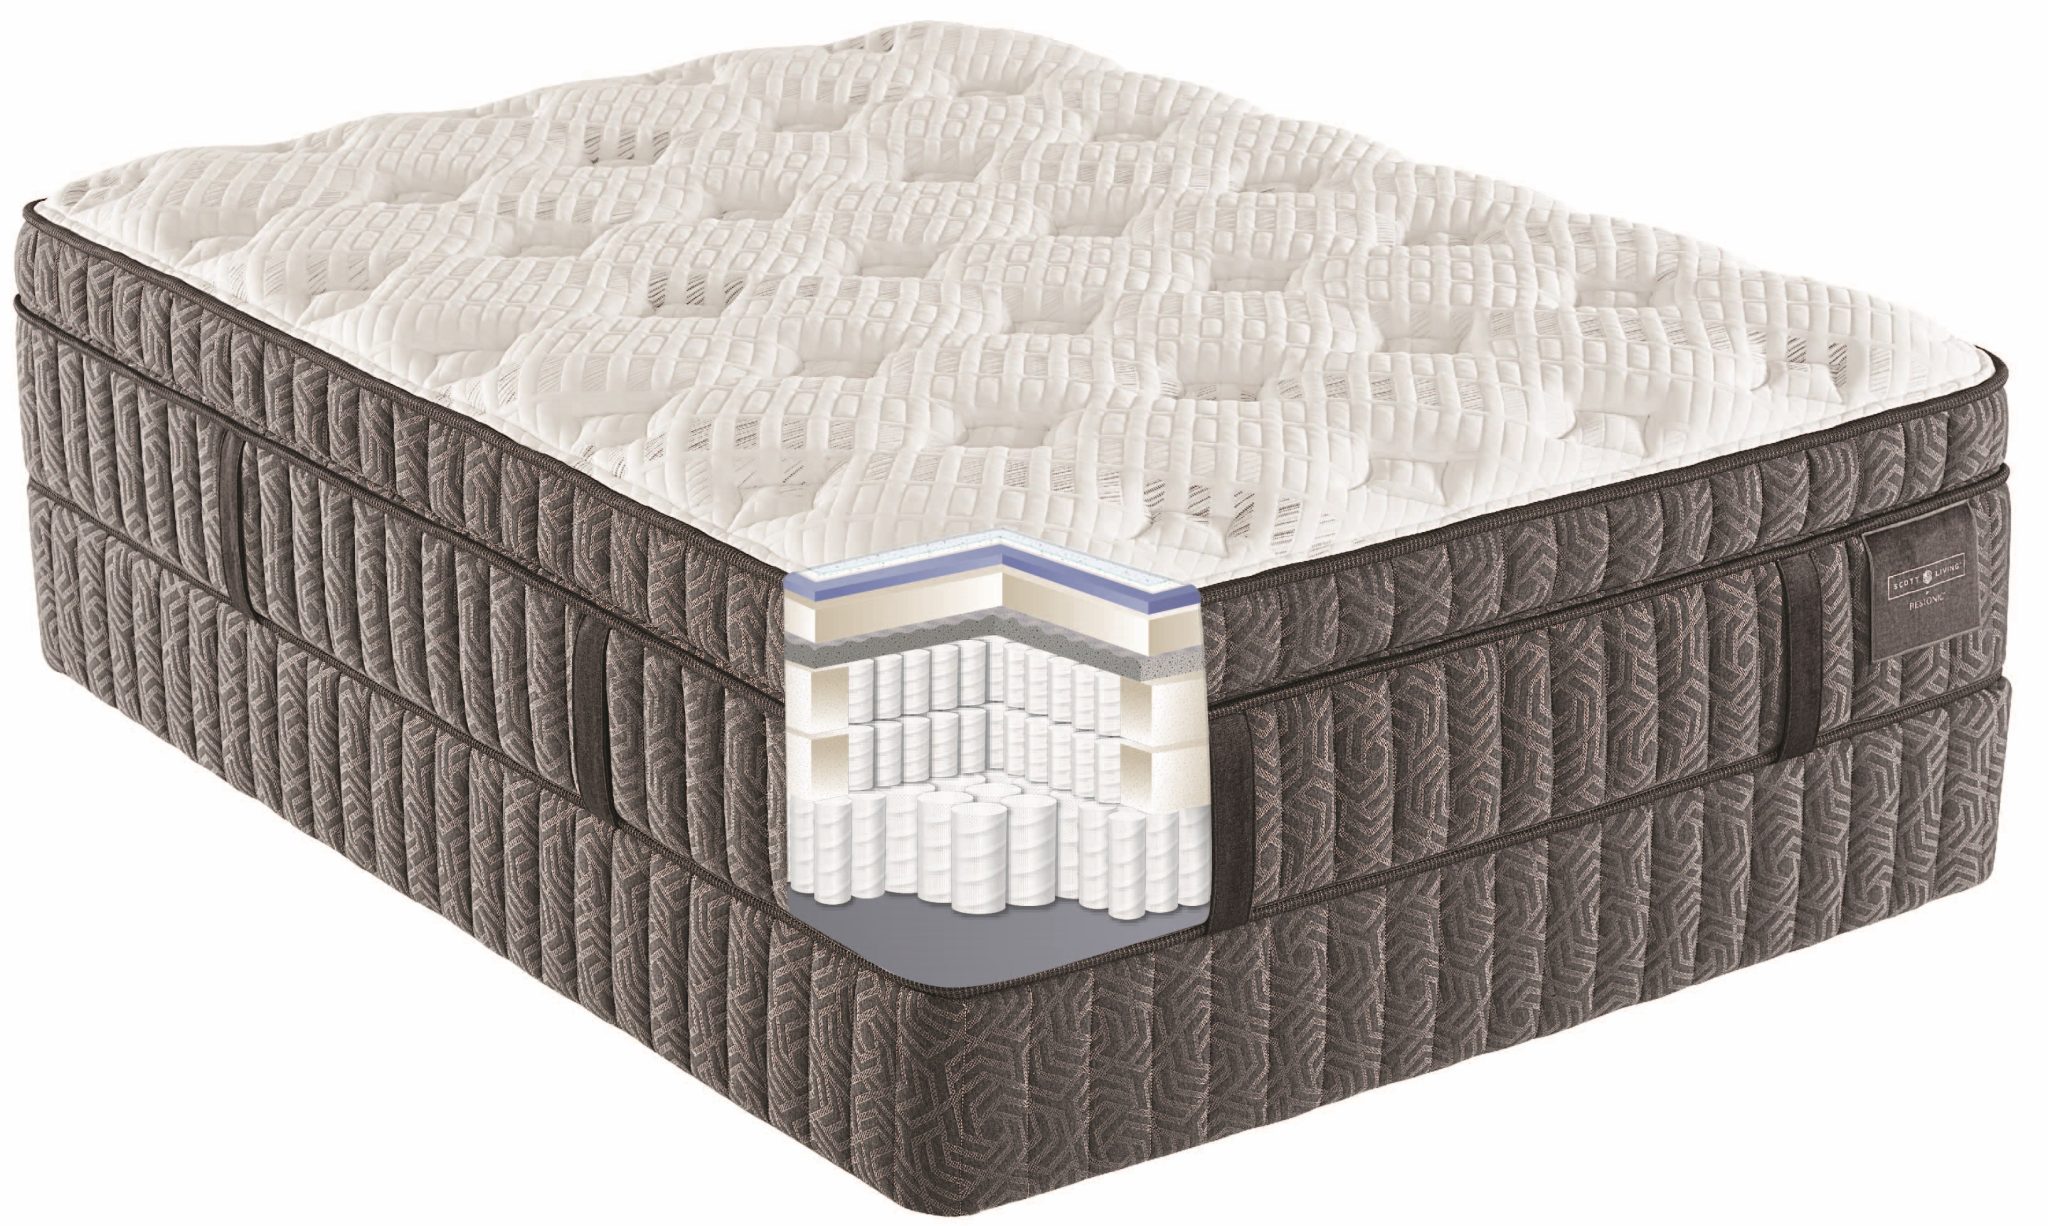 reviews on restonic latex mattresses